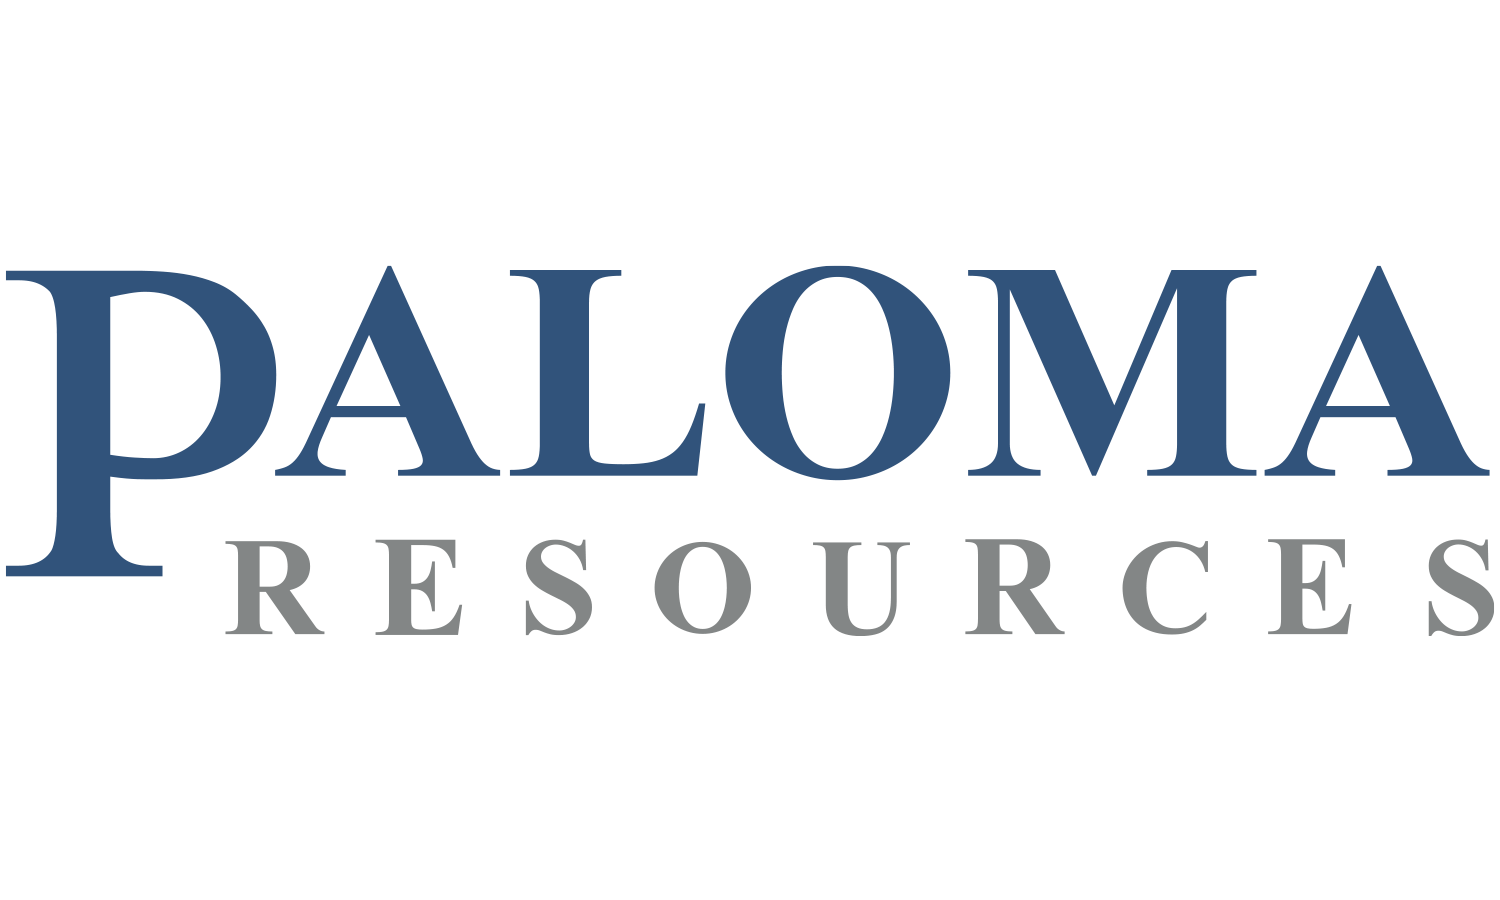 Paloma Resources